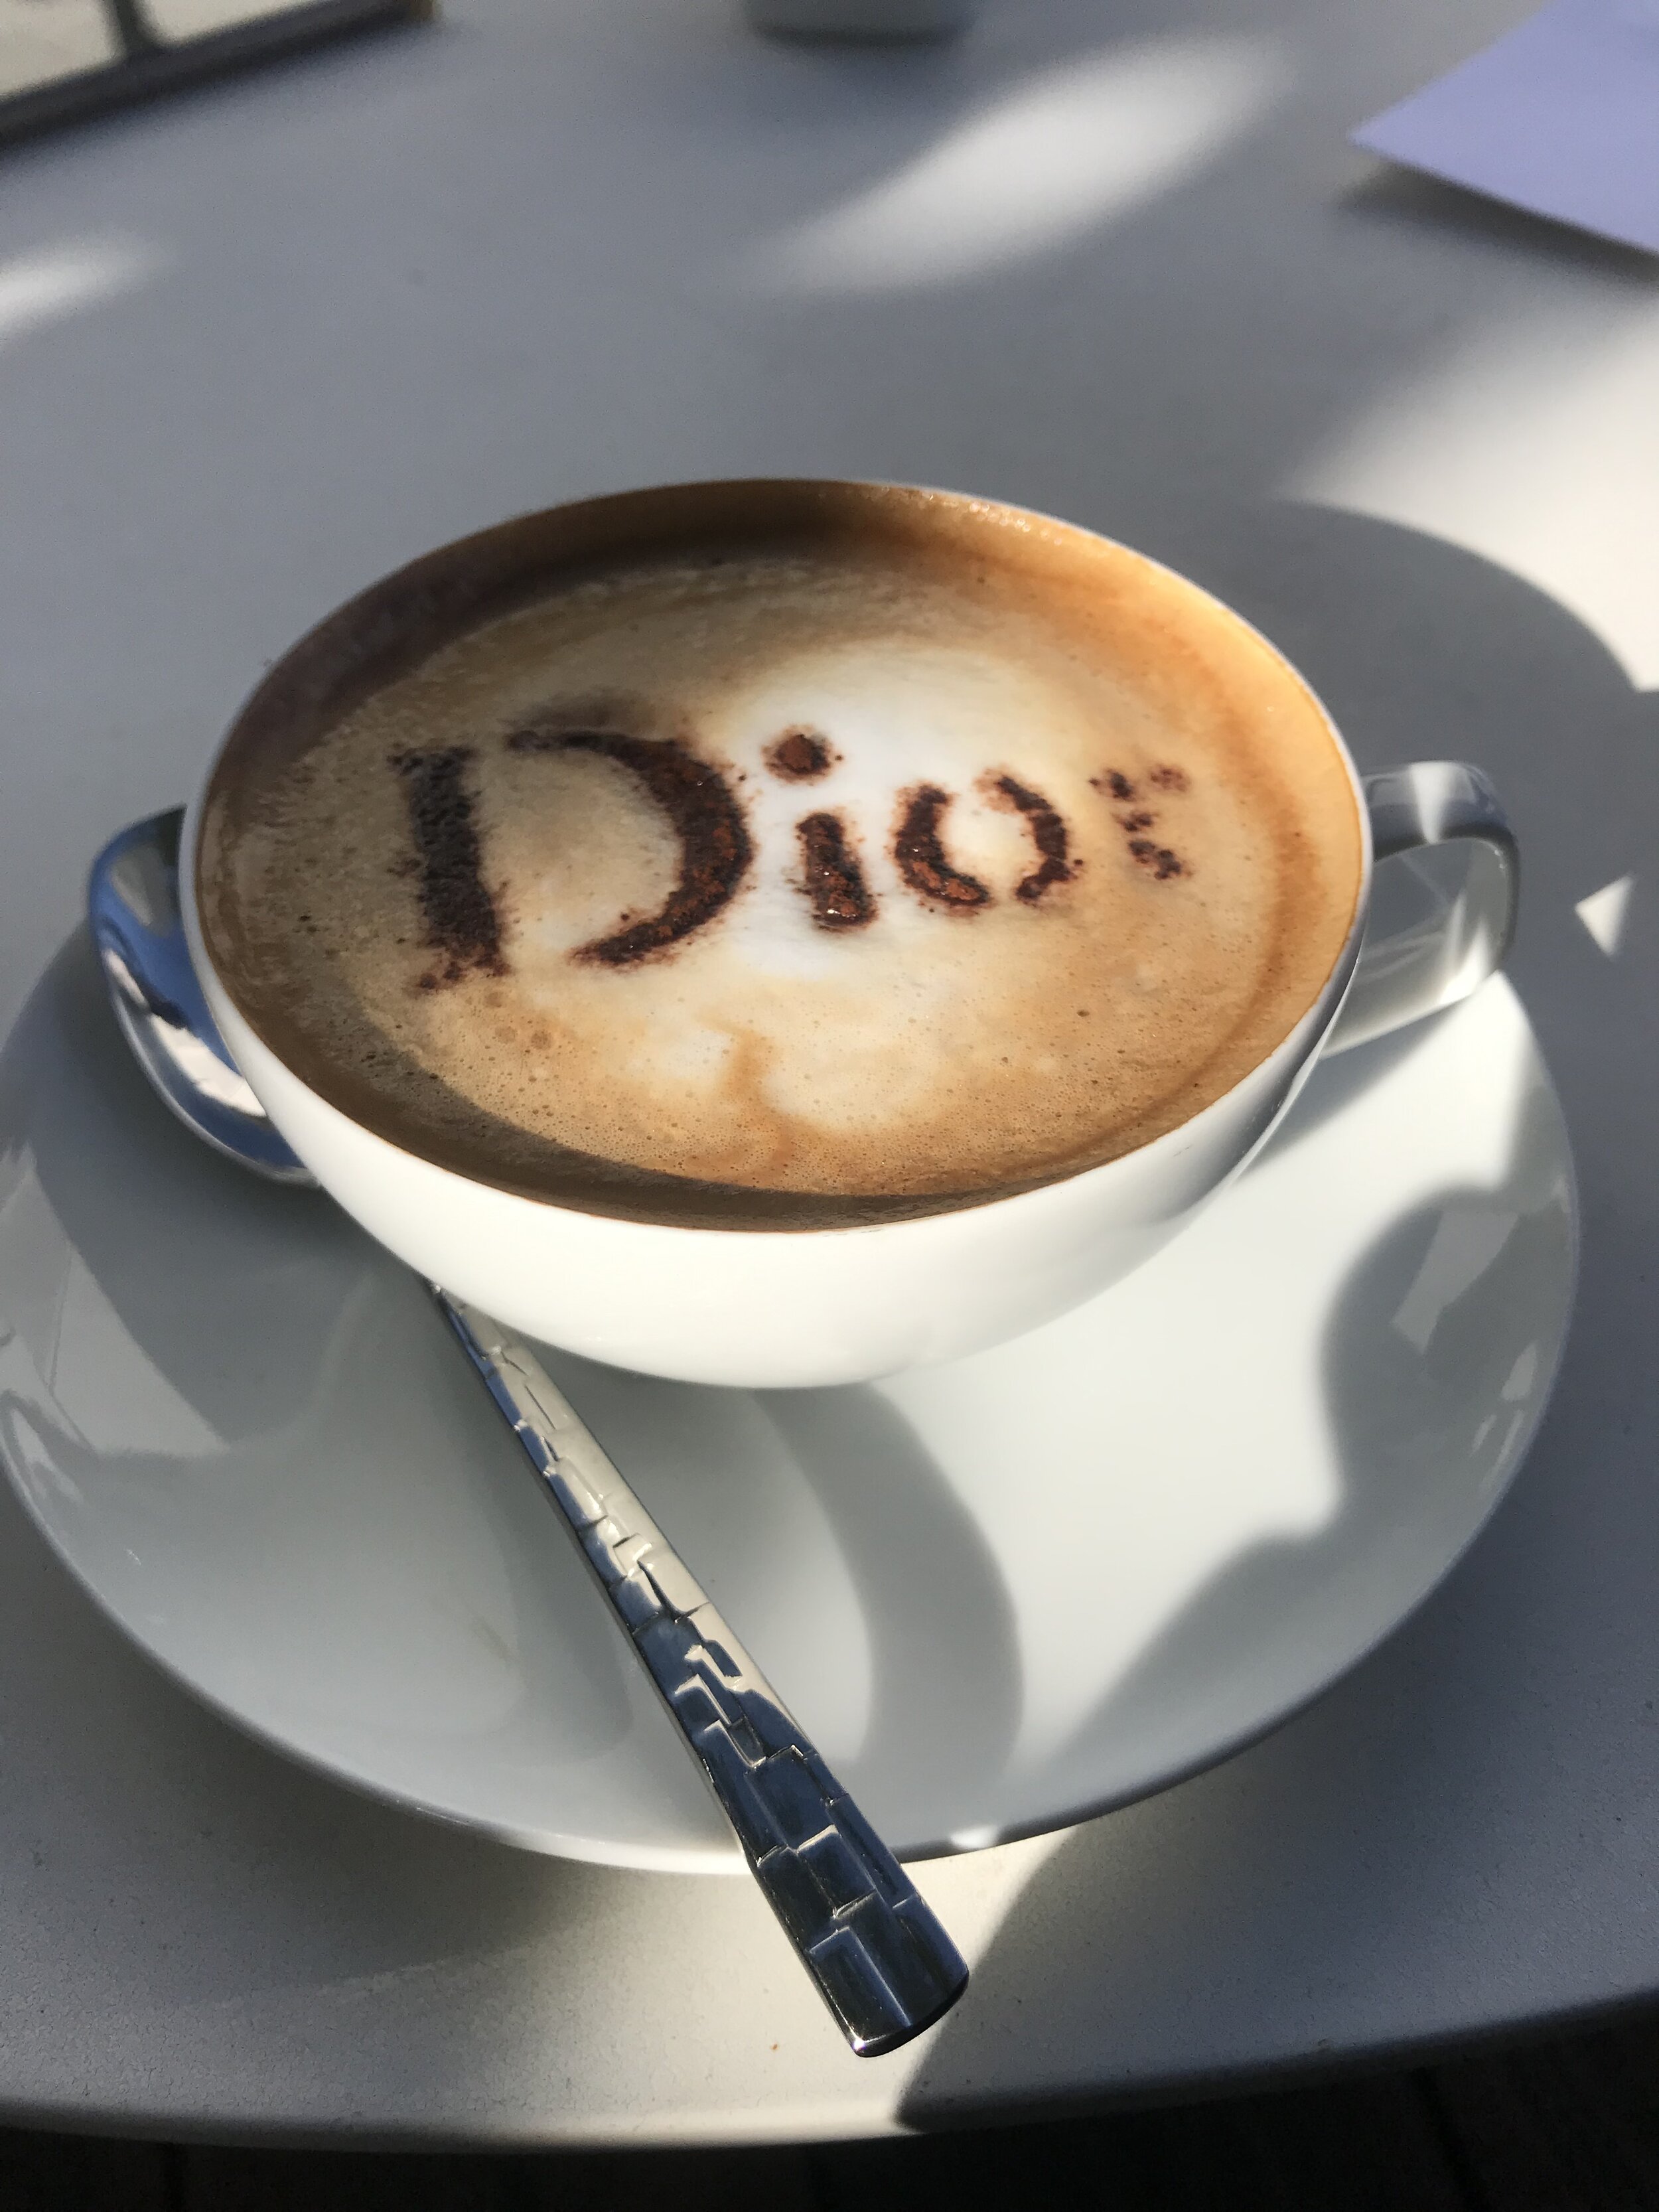  Dior Cafe, Miami Design District, Miami, Florida 